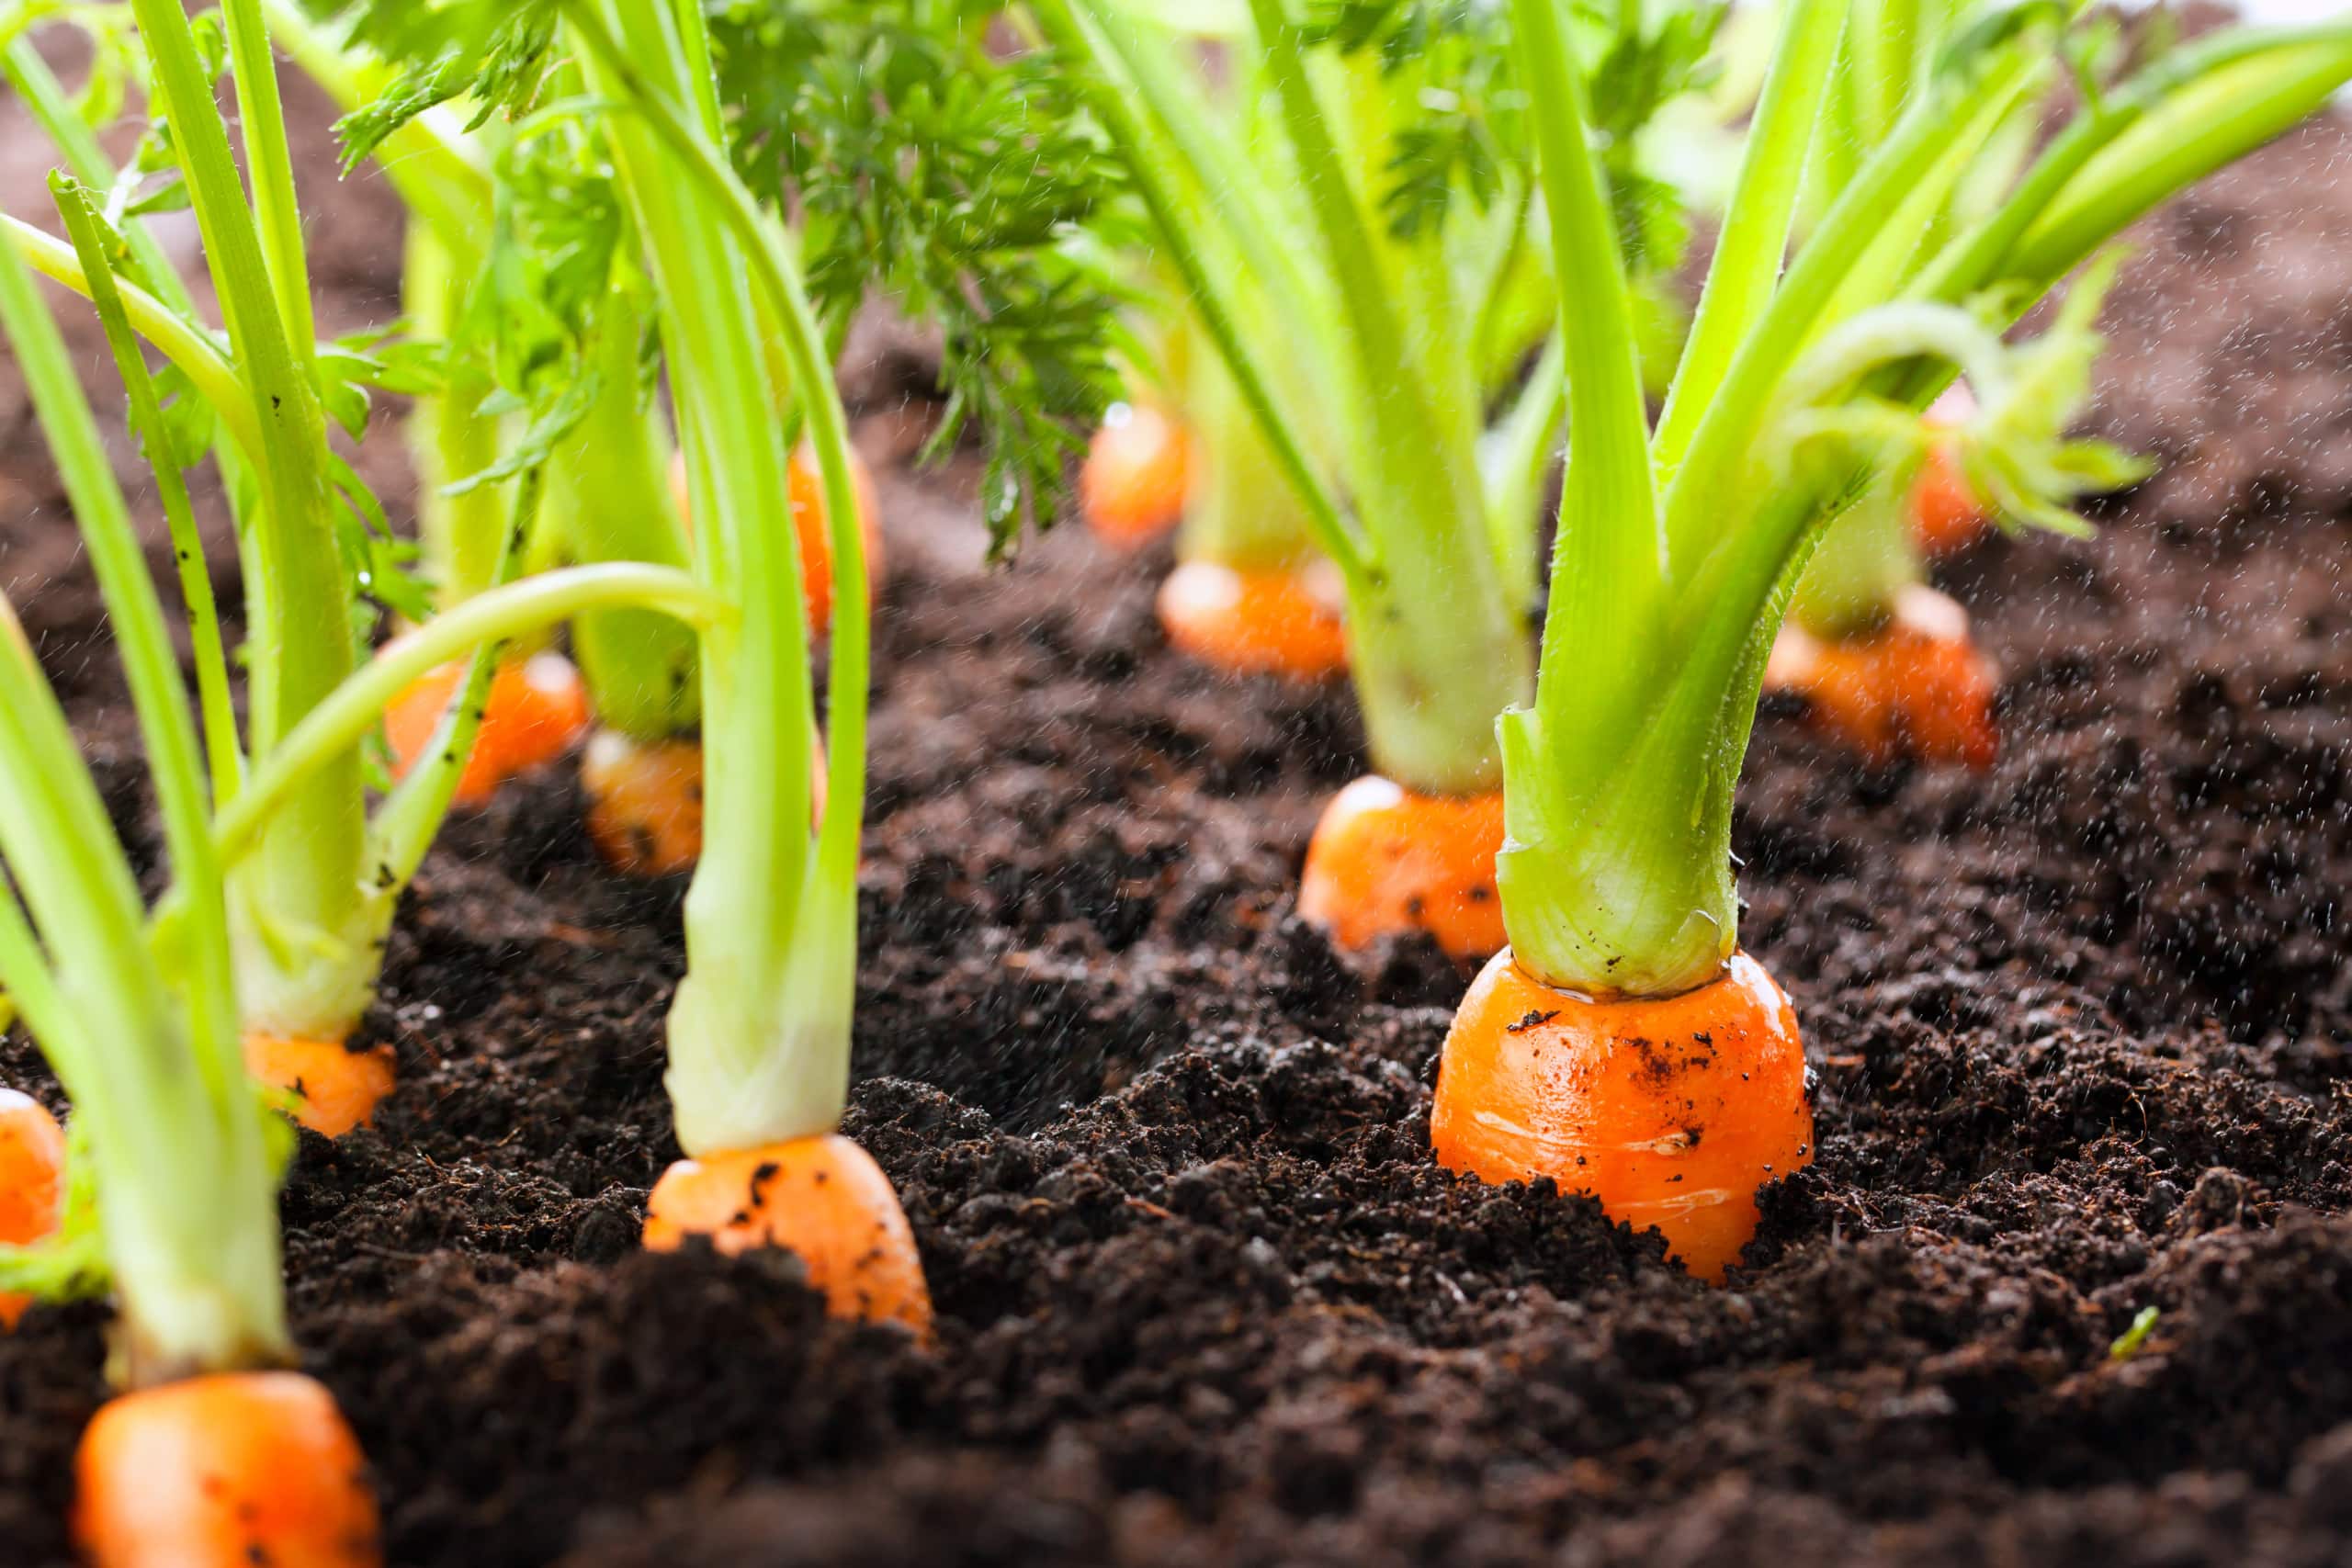 Carrot vegetable grows in the garden